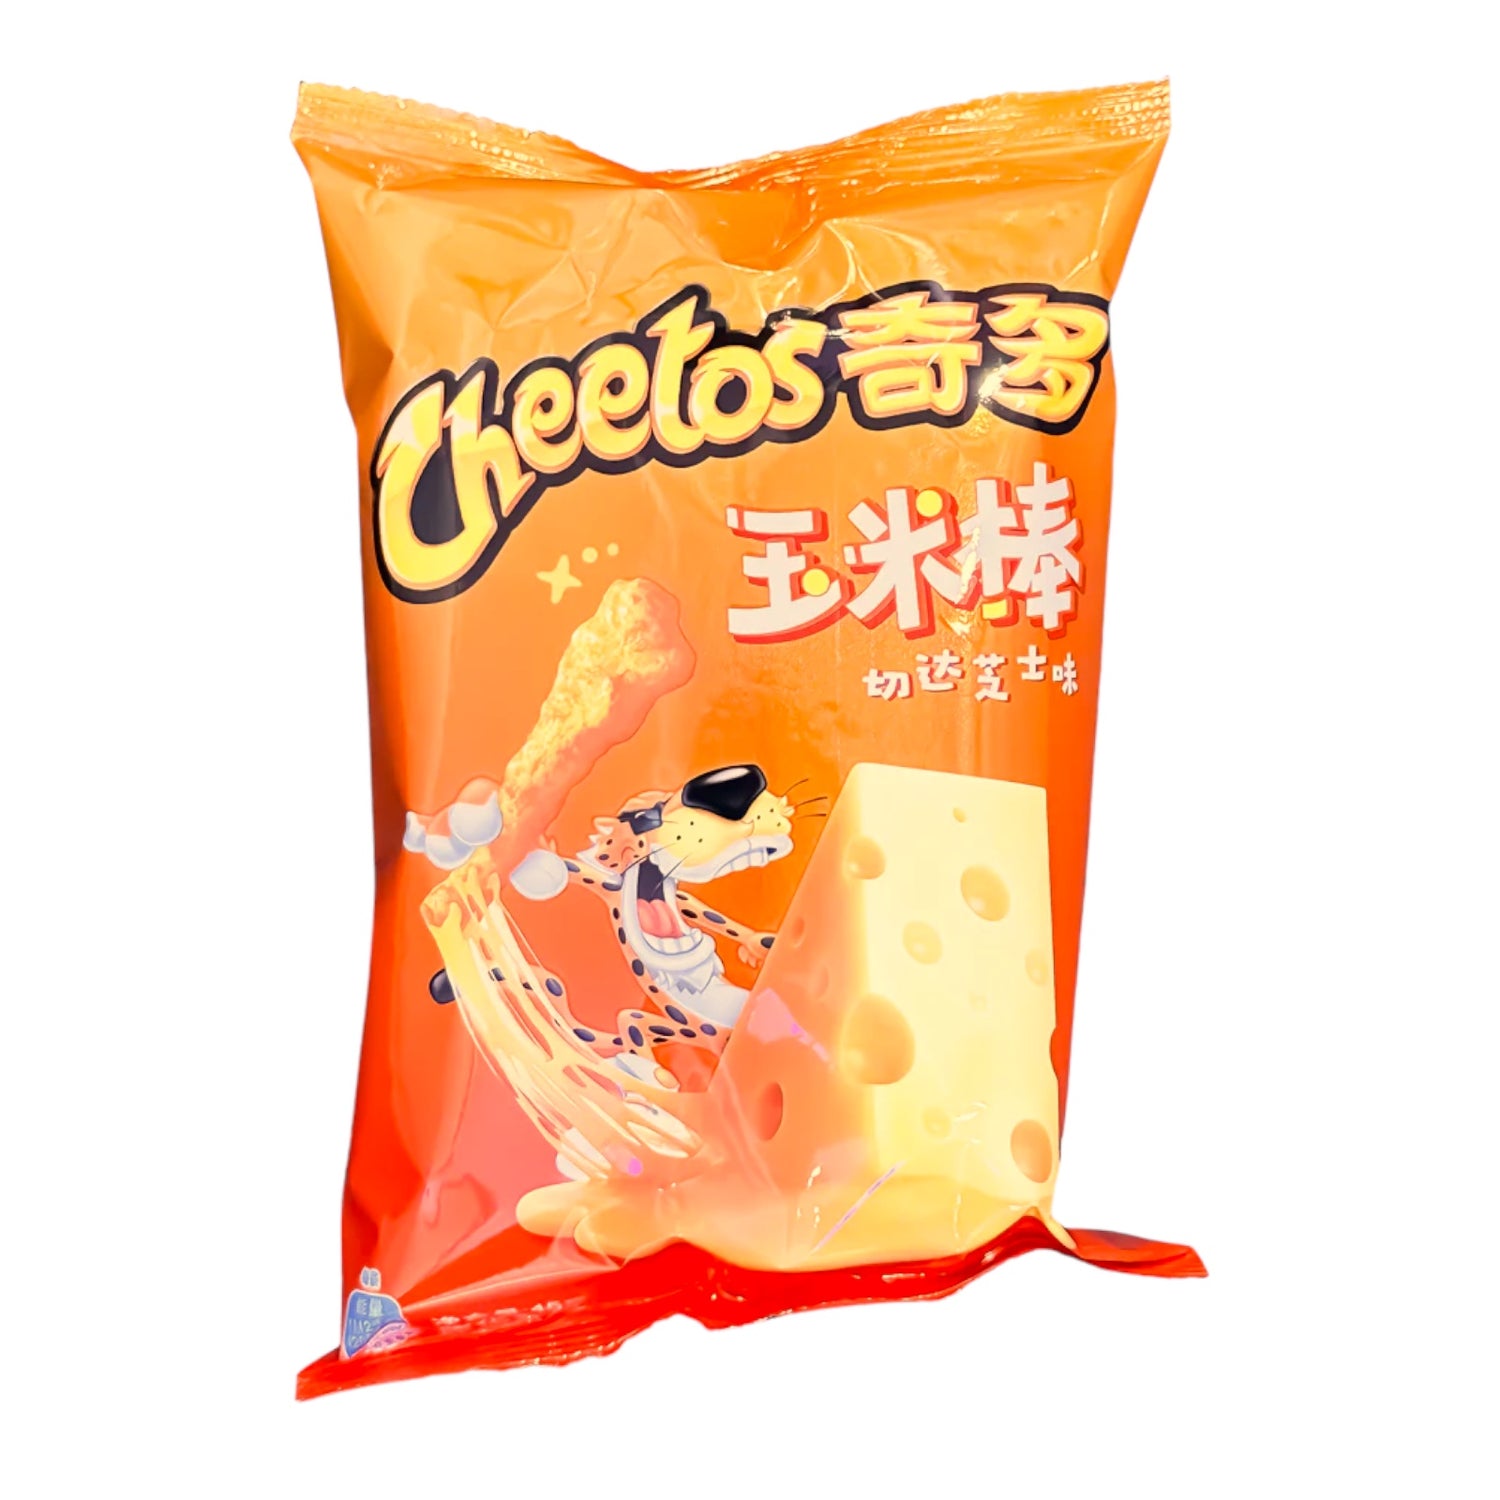 Cheetos Golden Cheddar Cheese 90g (China)